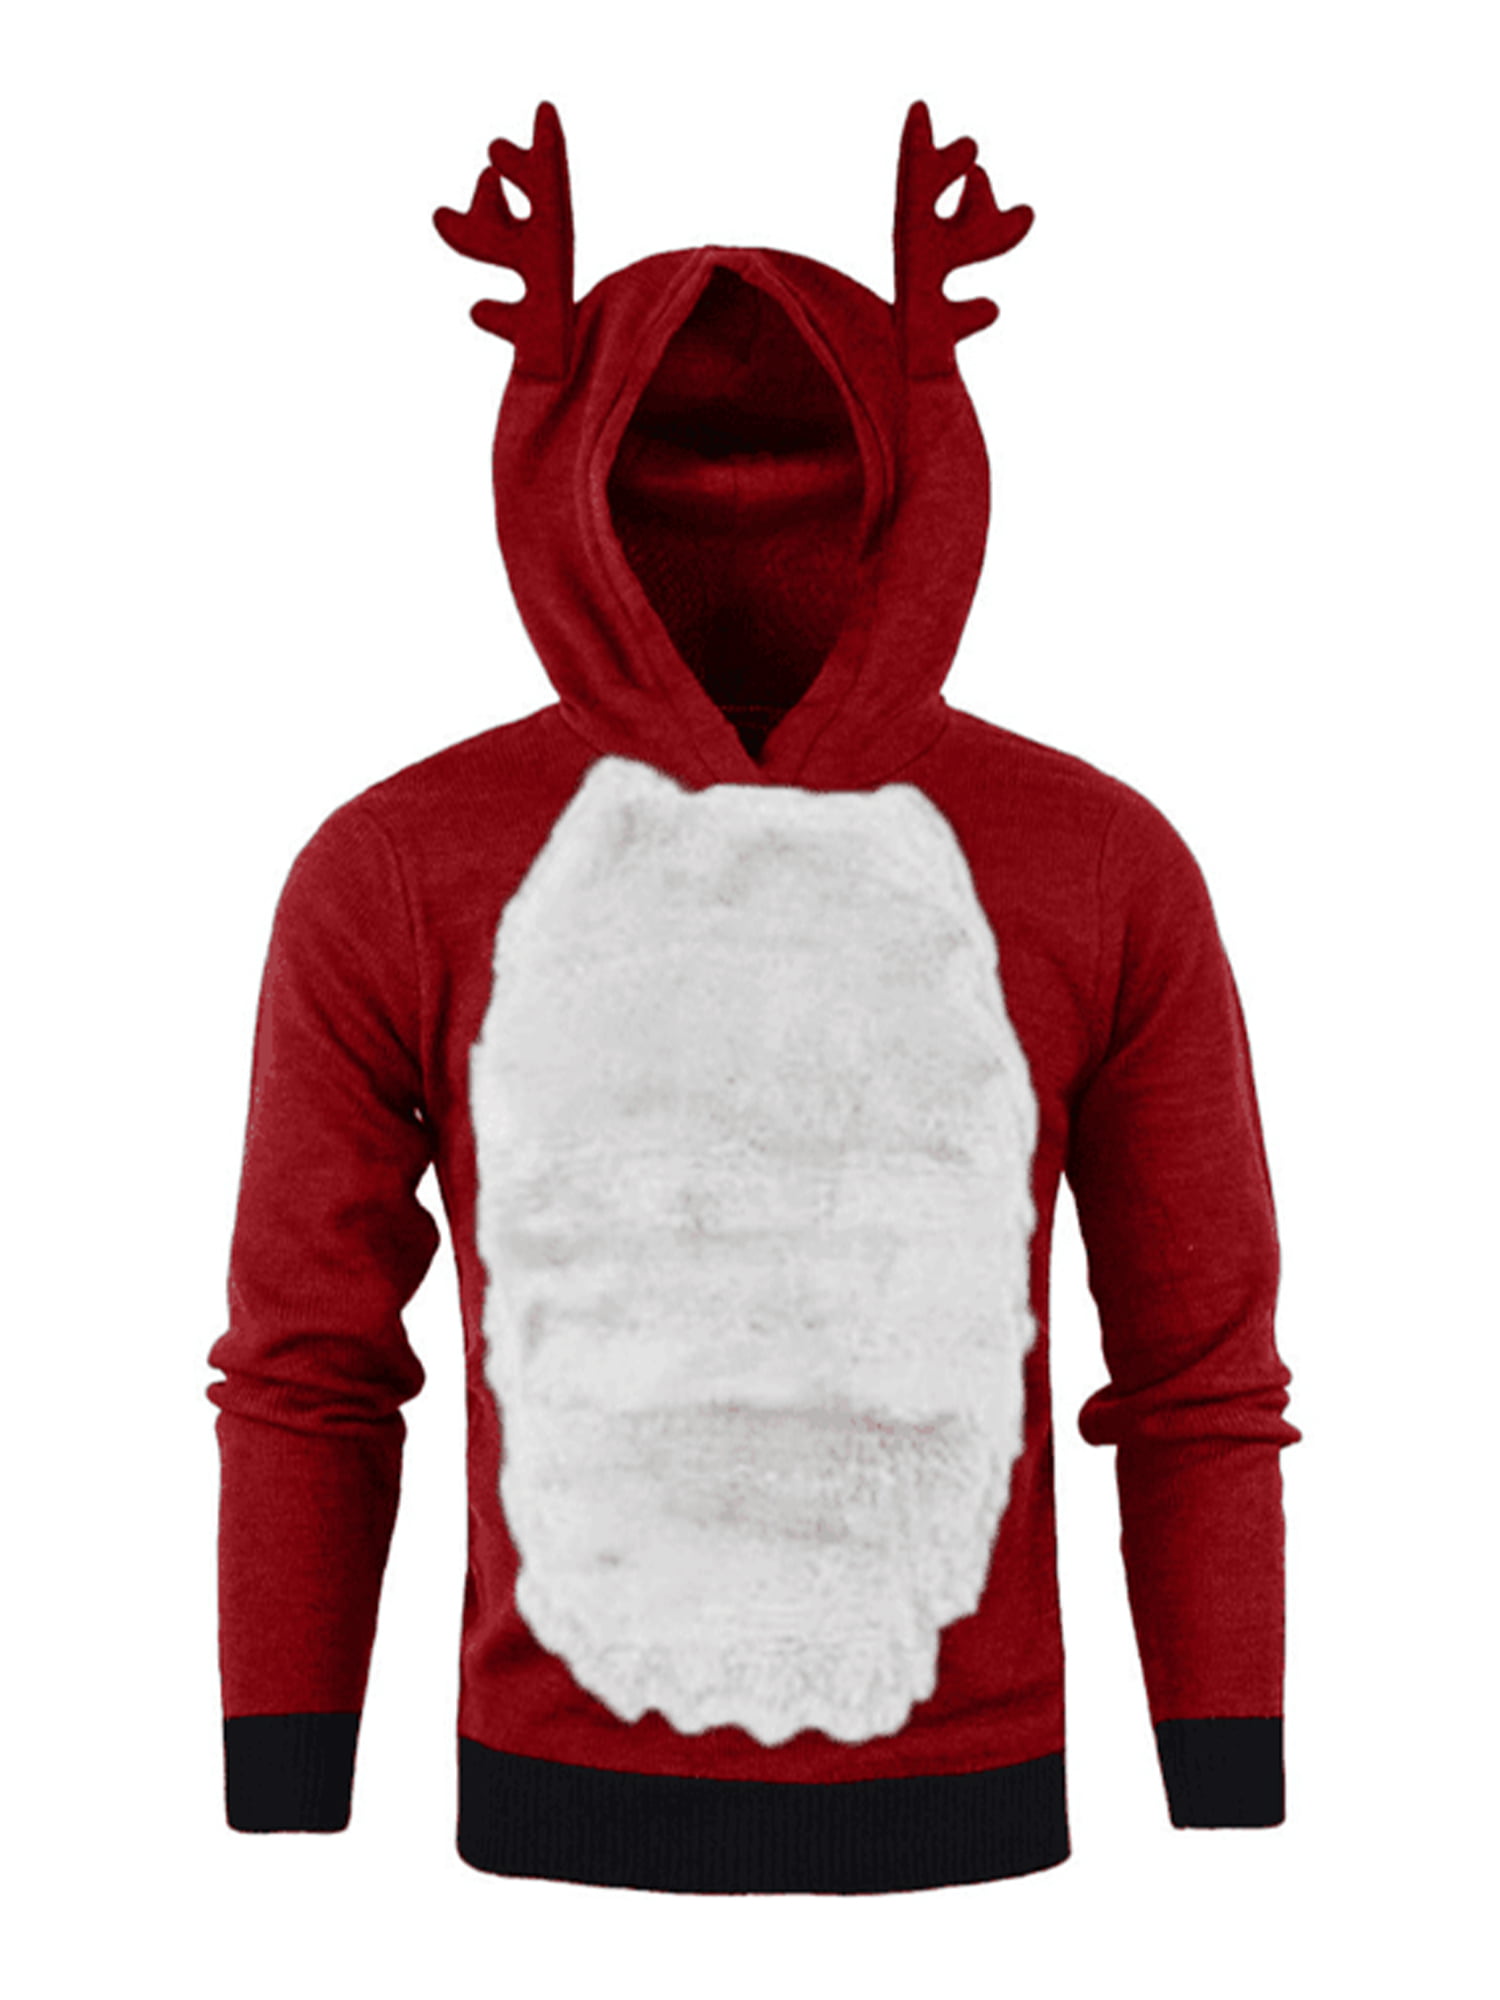 Ice Nine Kills Hoodie Men Sweatshirt Graphic Printed Long Sleeve Pullover Autumn Winter Leisure Hoodies with Pocket